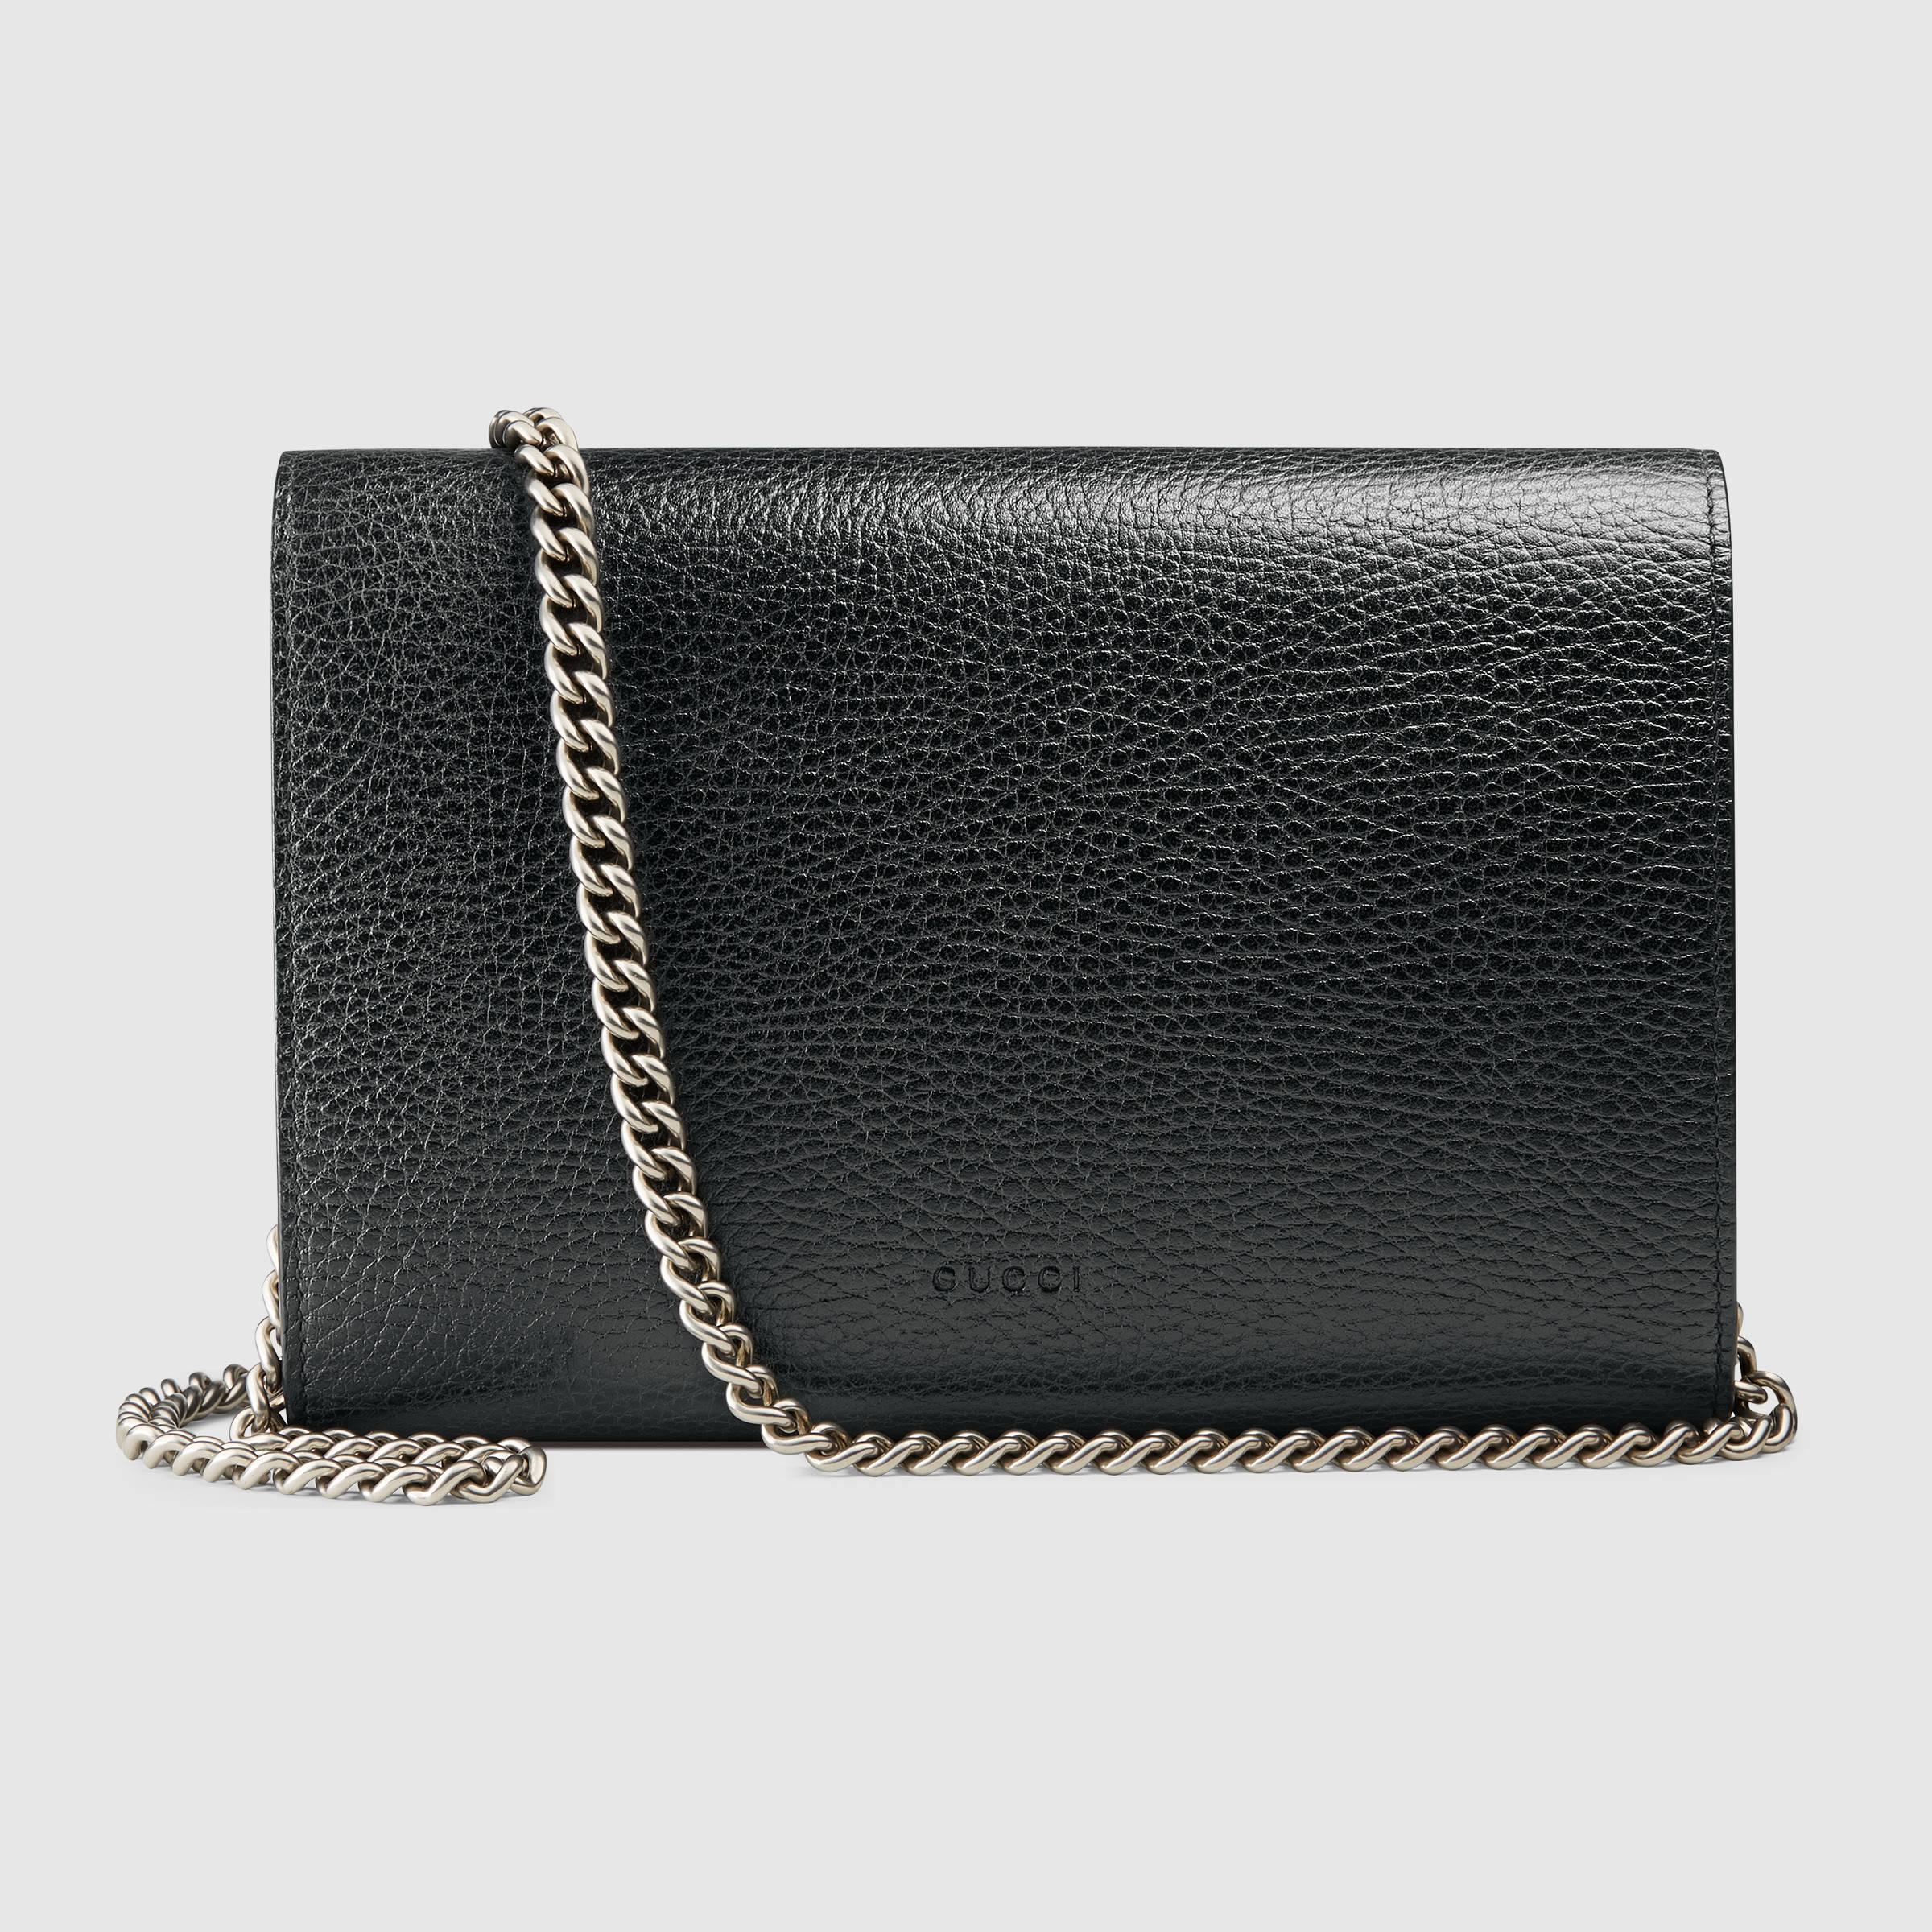 Gucci Dionysus Leather Mini Chain Bag in Black | Lyst